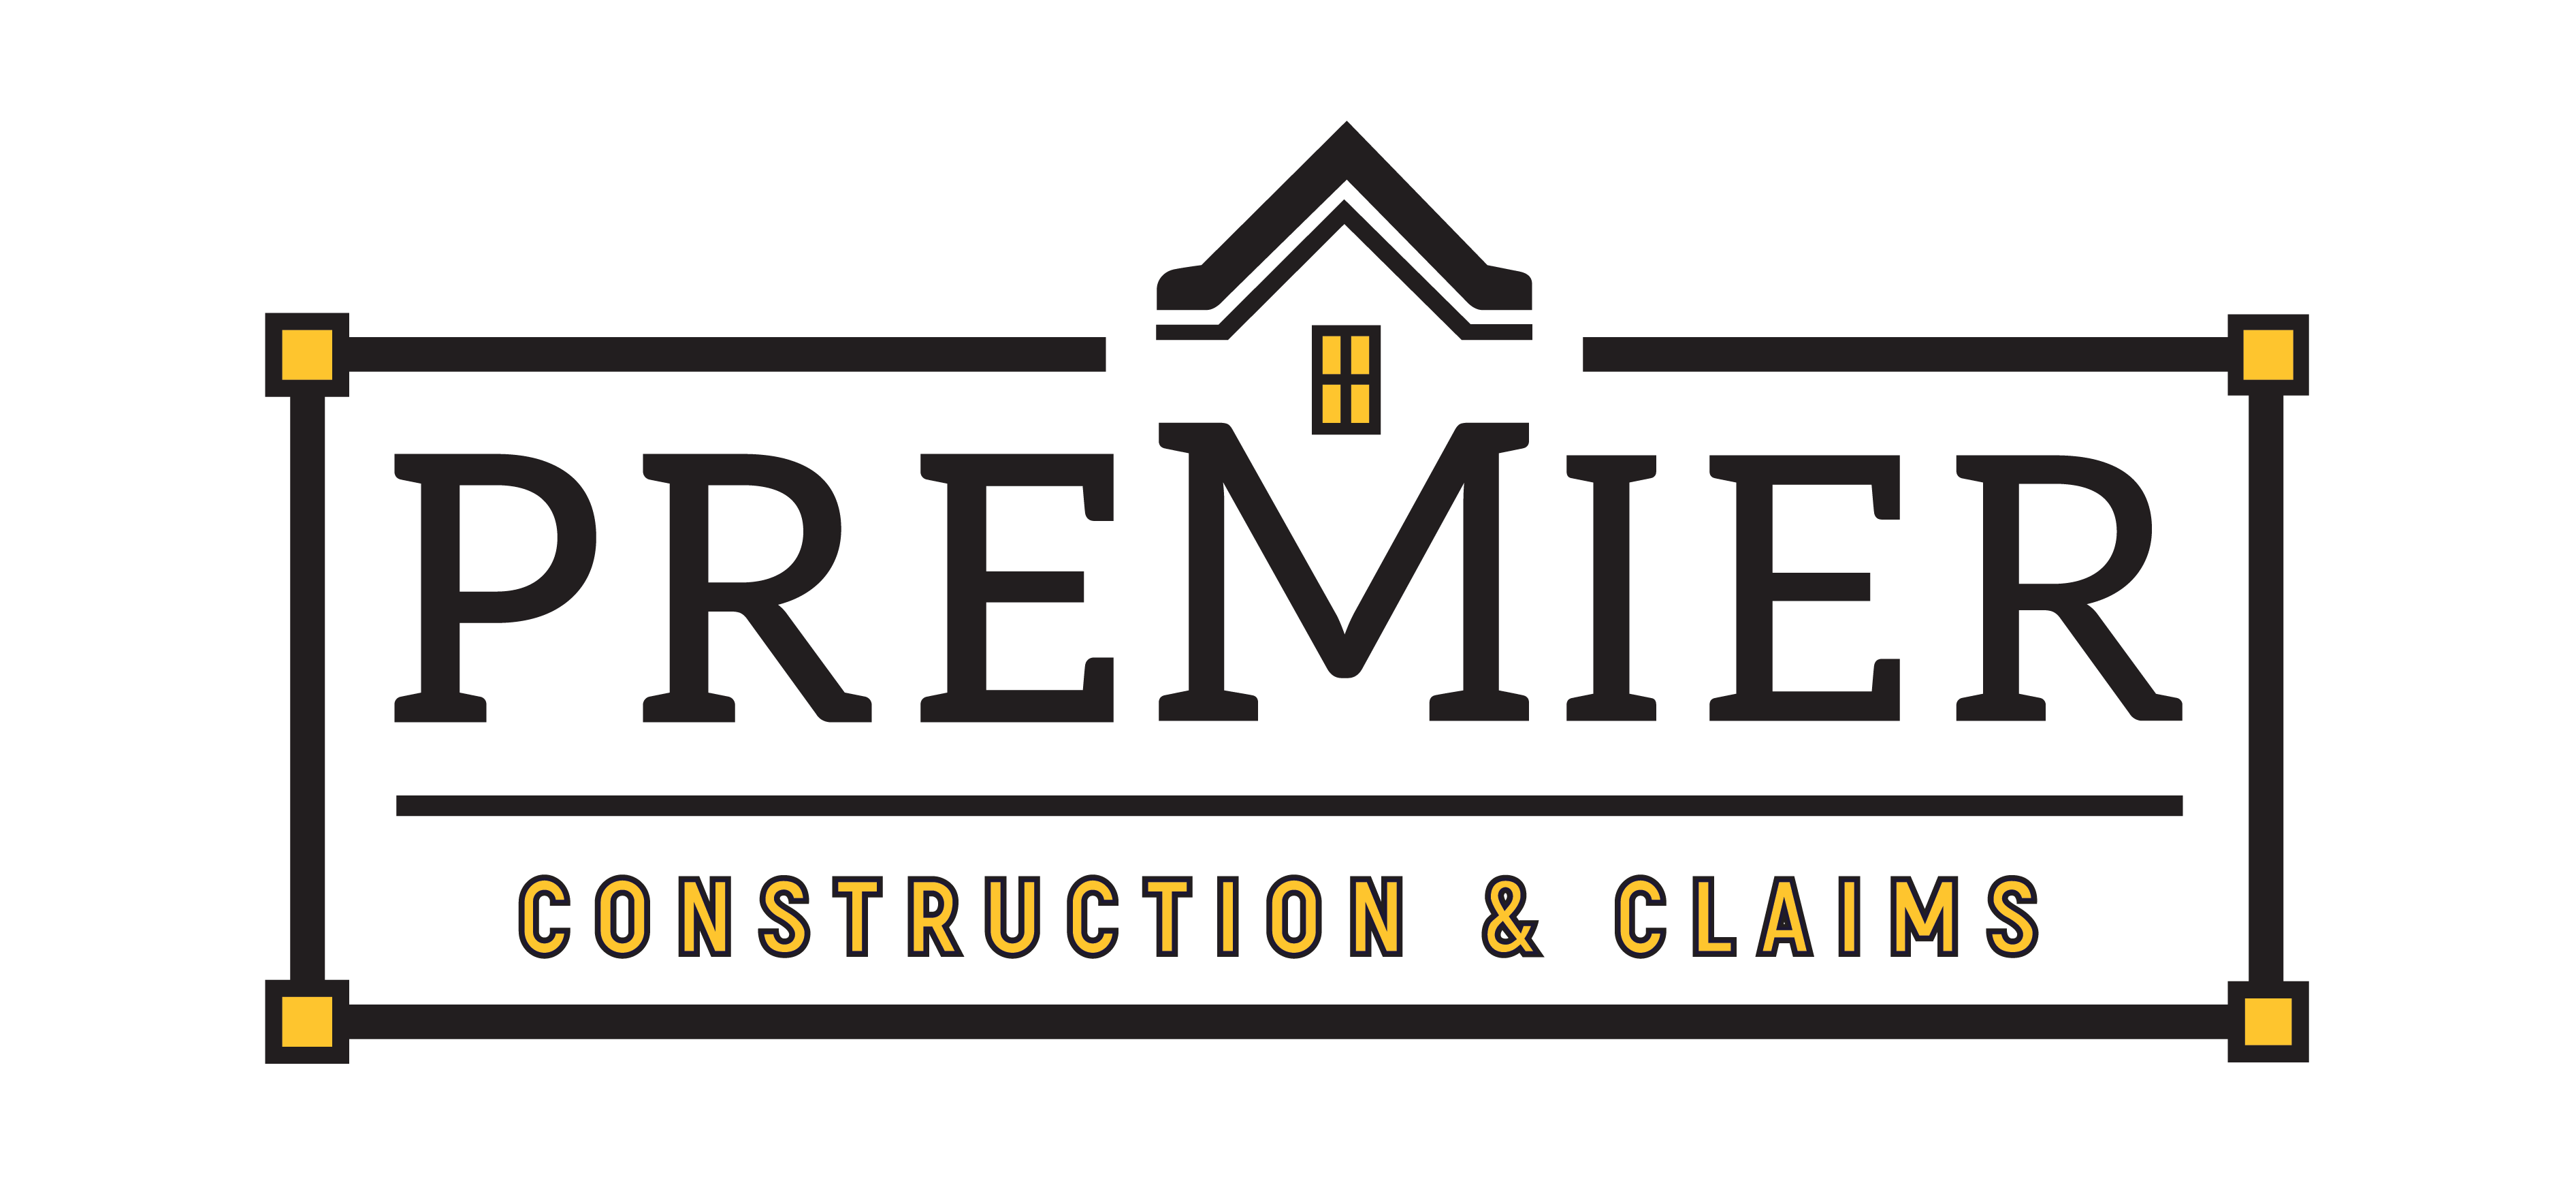 image of Premier Construction logo